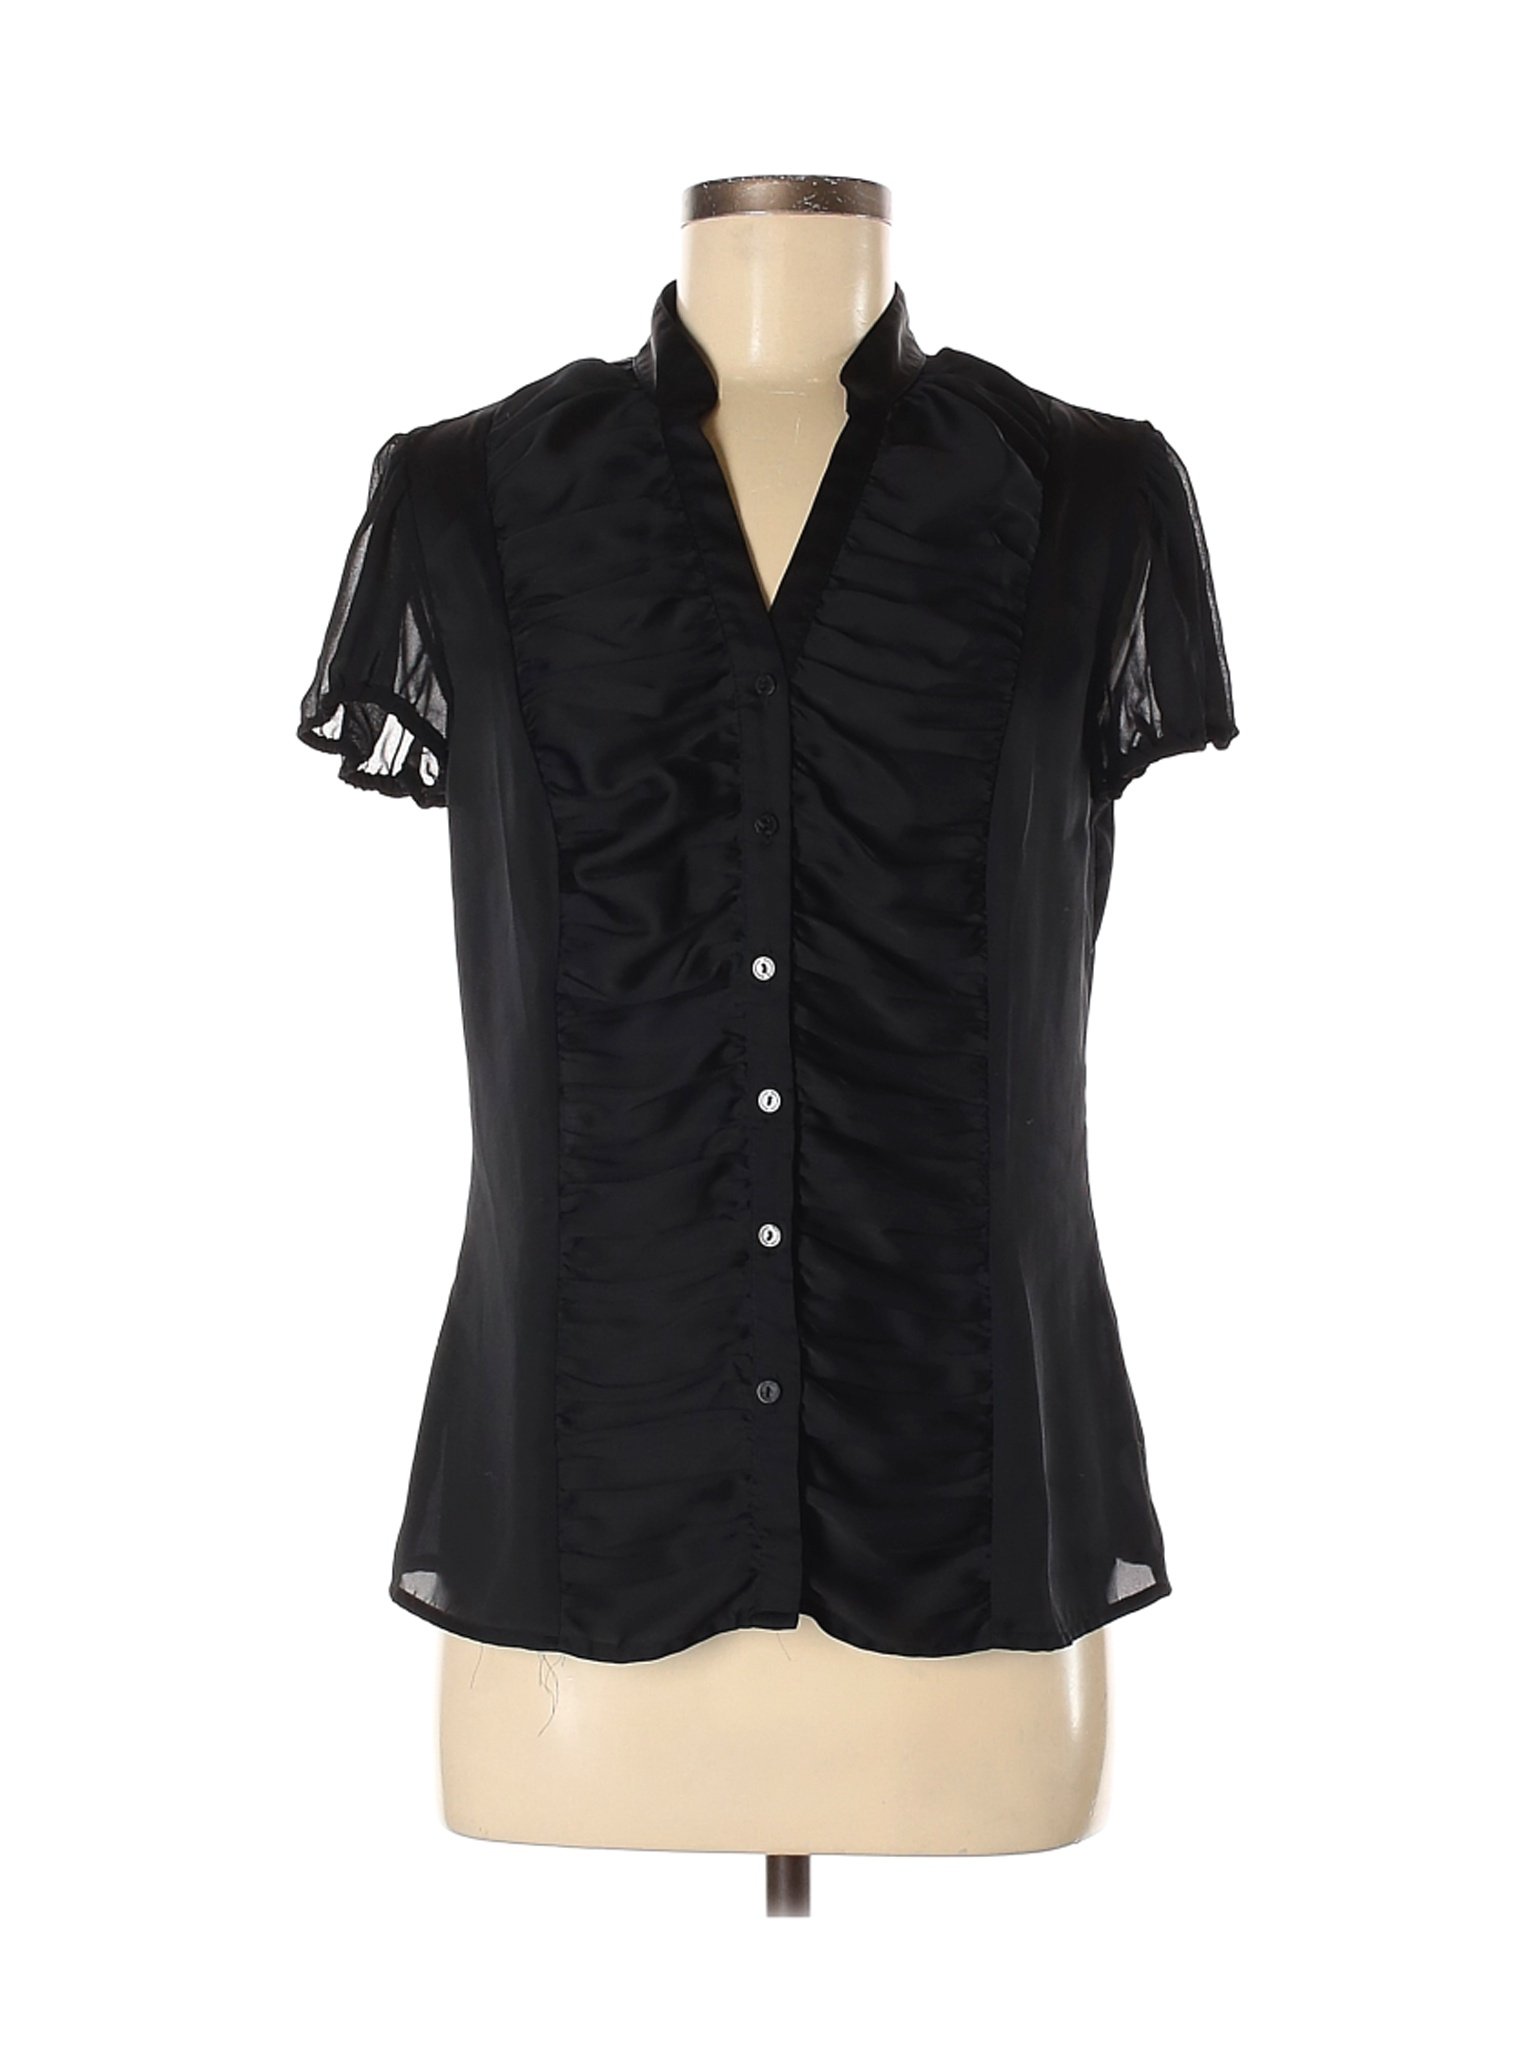 Worthington Women Black Short Sleeve Blouse M | eBay